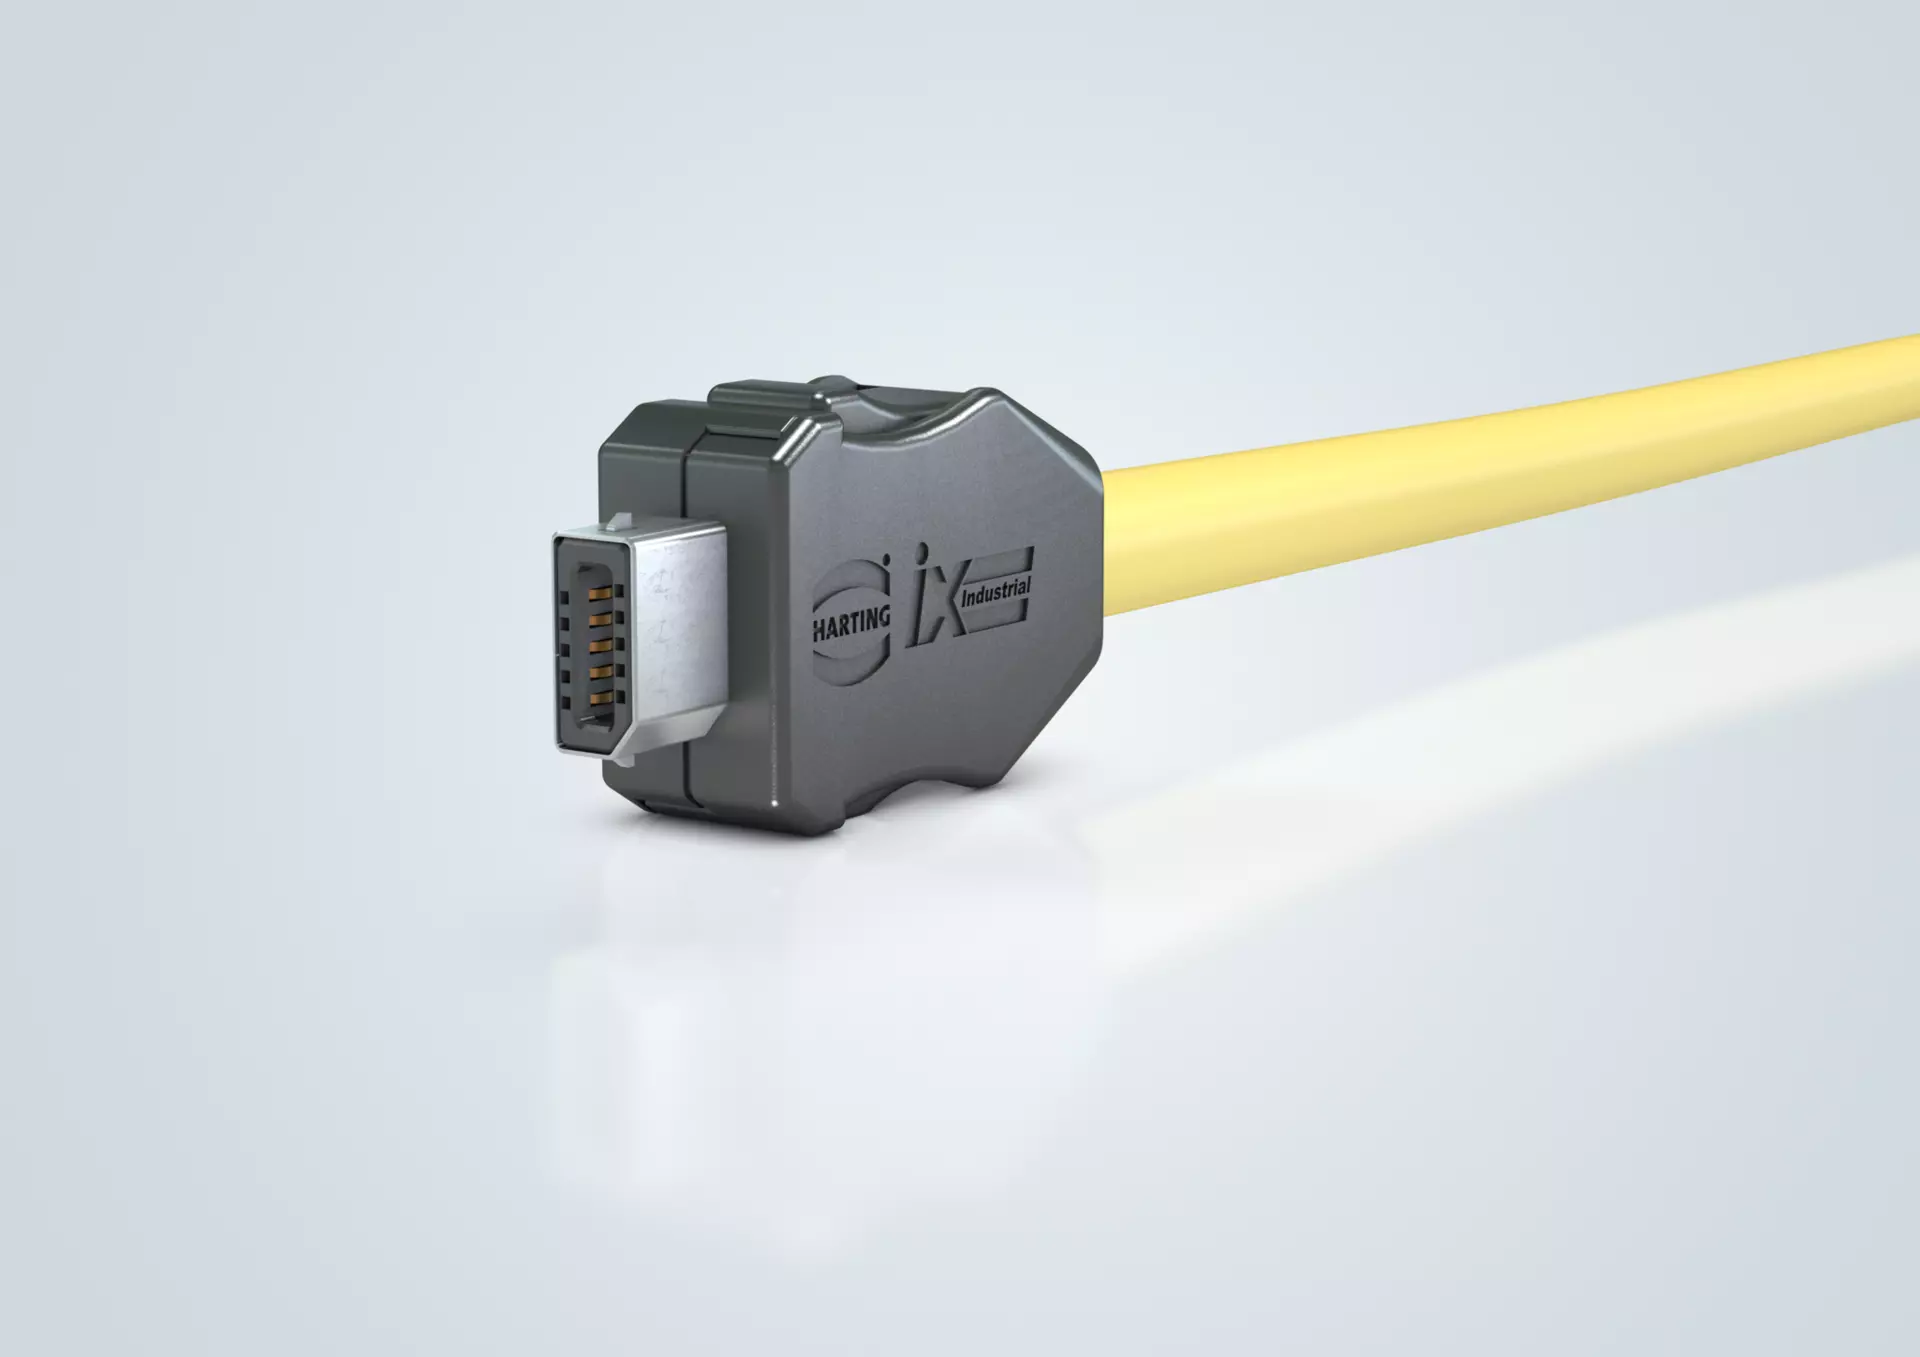 ix Industrial connector